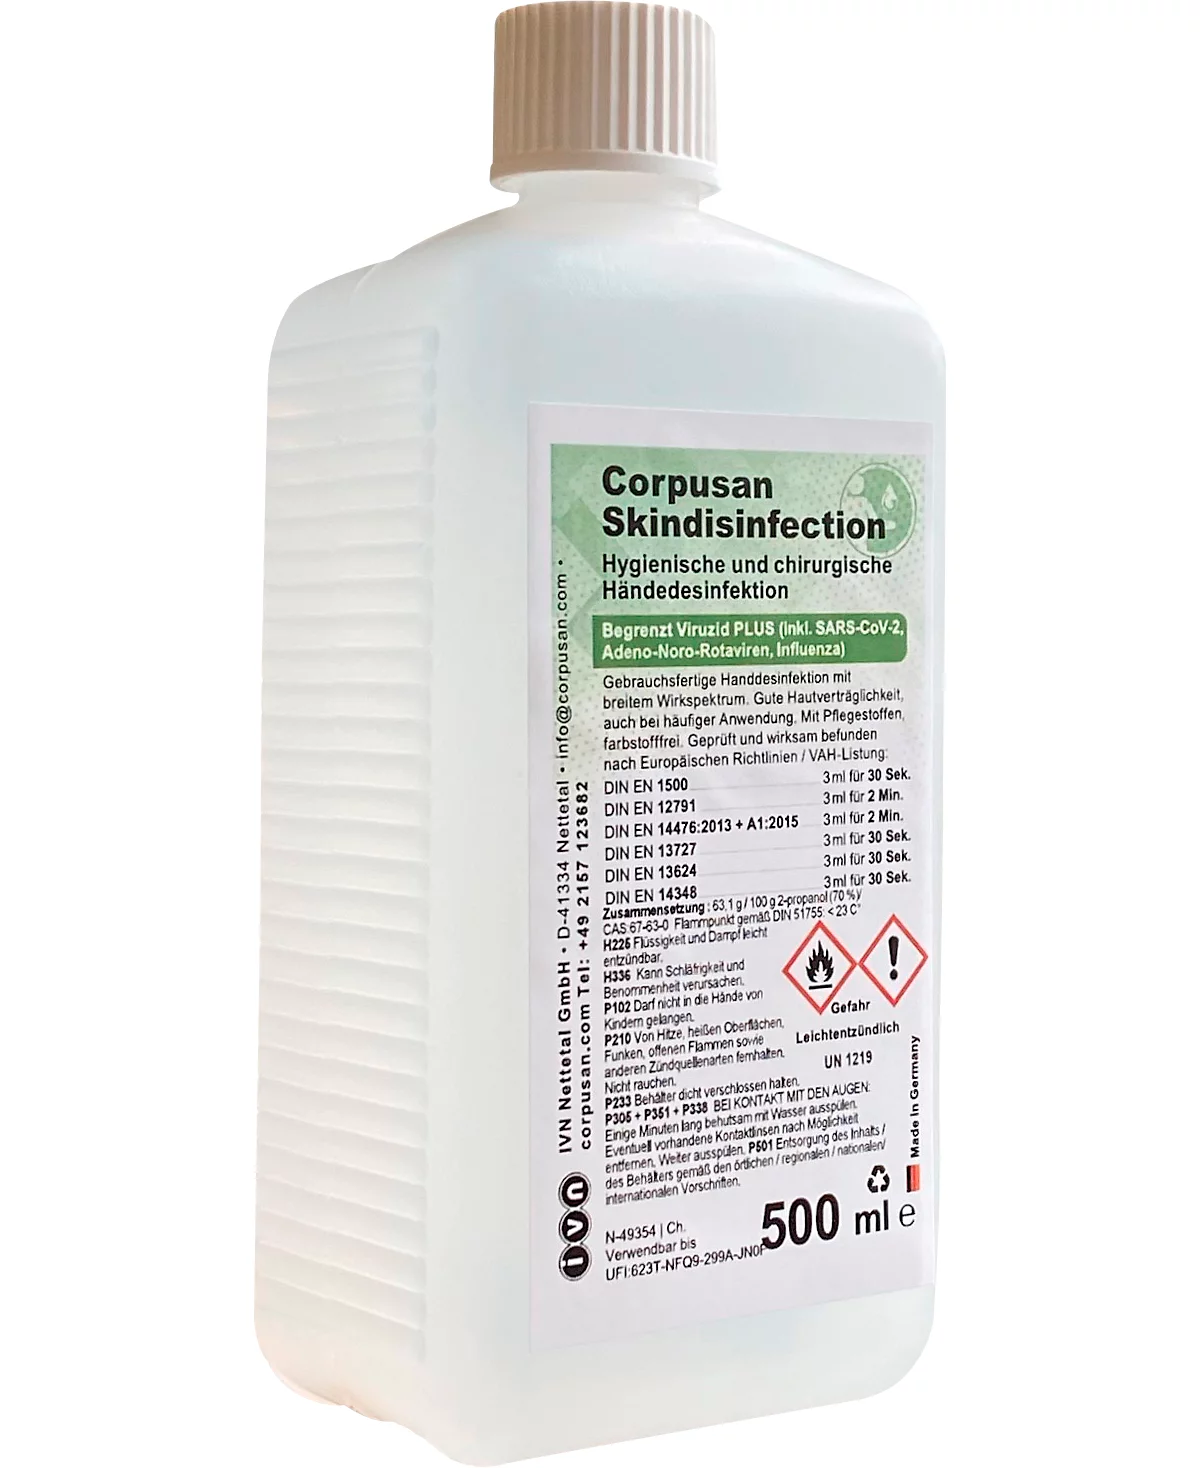 Hautdesinfektionsmittel CORPUSAN® Skindisinfection, bakterizid, levurozid, begrenzt viruzid, farblos, 12 x 500 ml